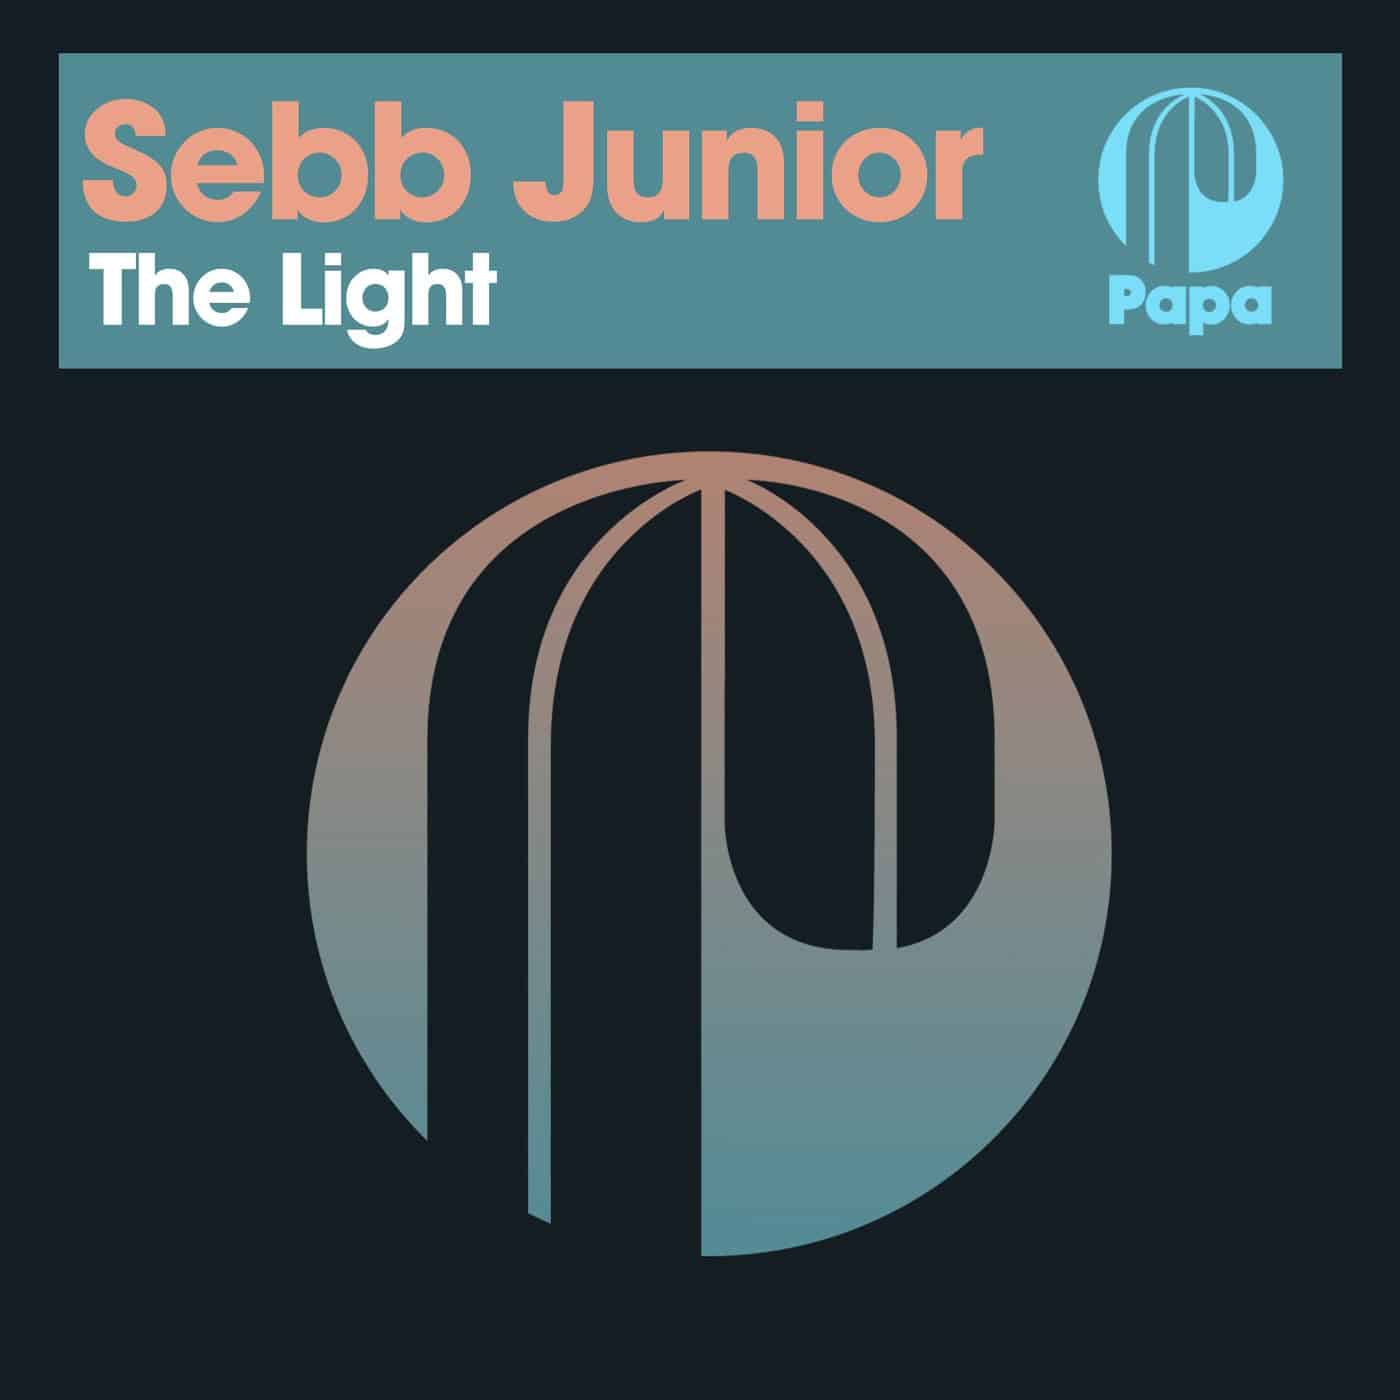 Download Sebb Junior - The Light on Electrobuzz